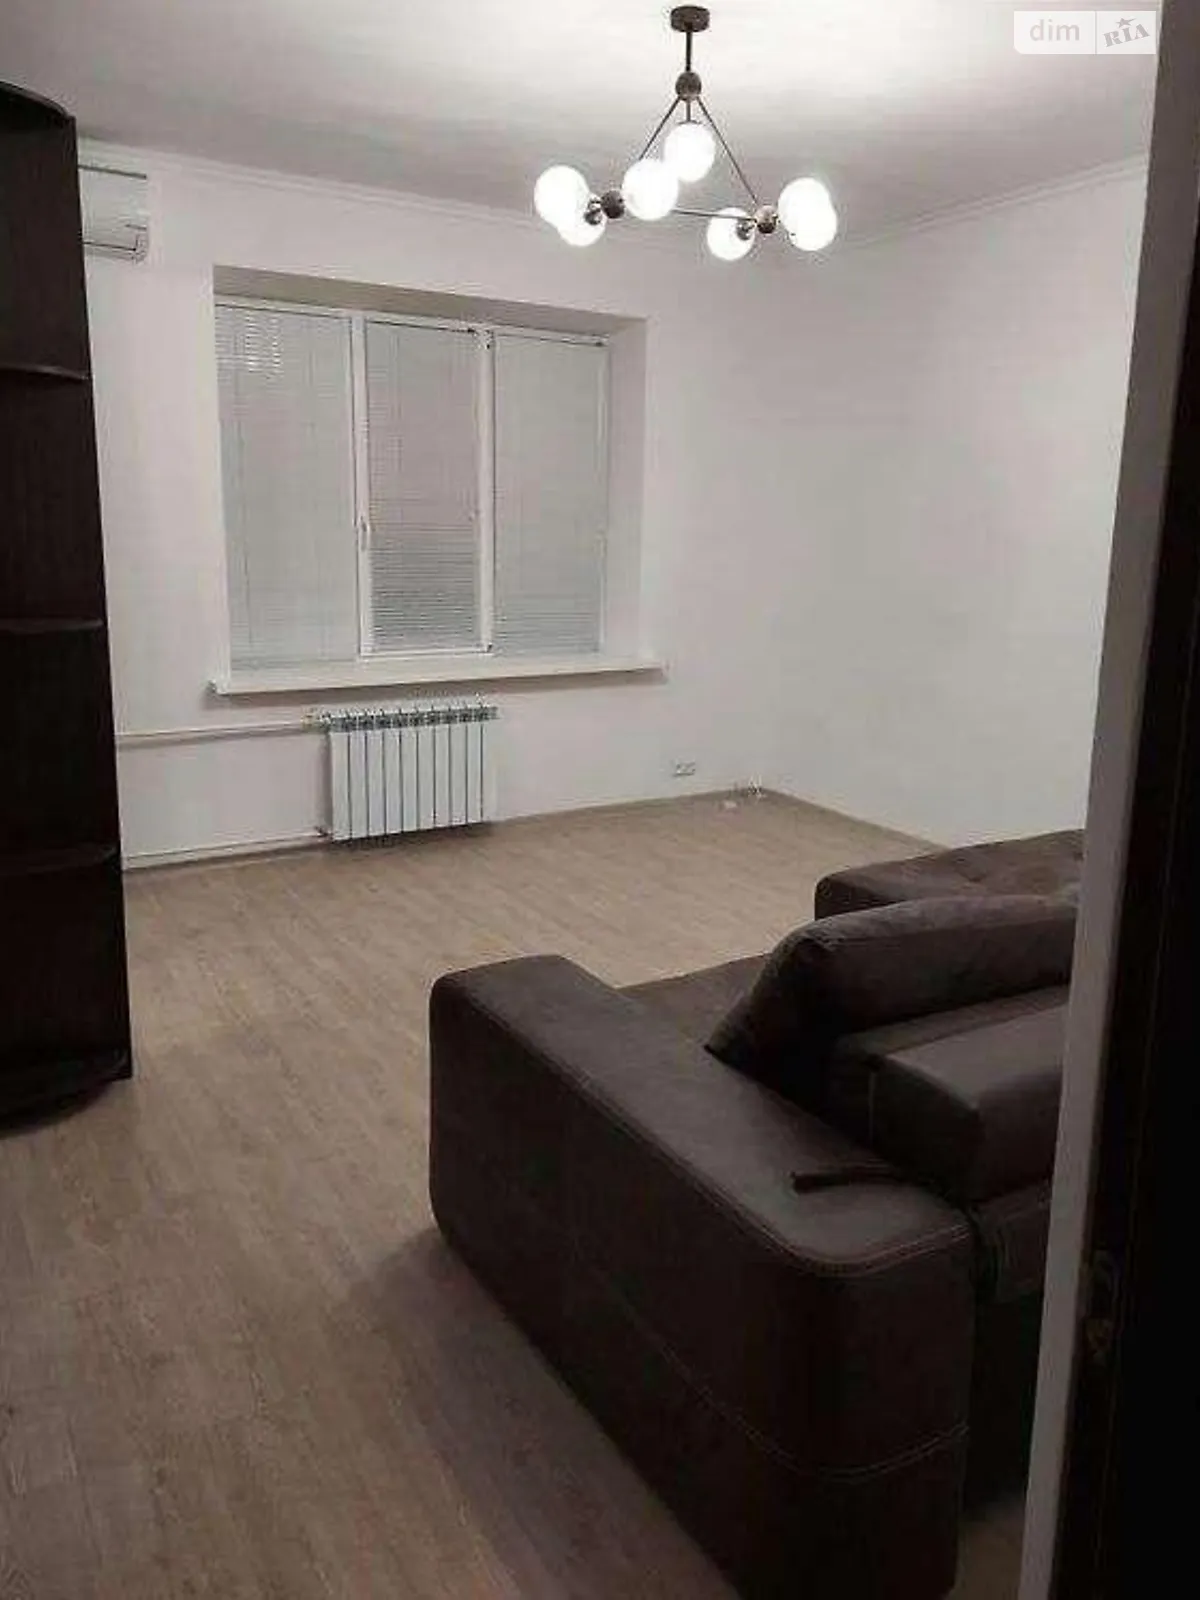 Сдается в аренду 3-комнатная квартира 60 кв. м в Киеве, ул. Шелковичная, 7А - фото 1